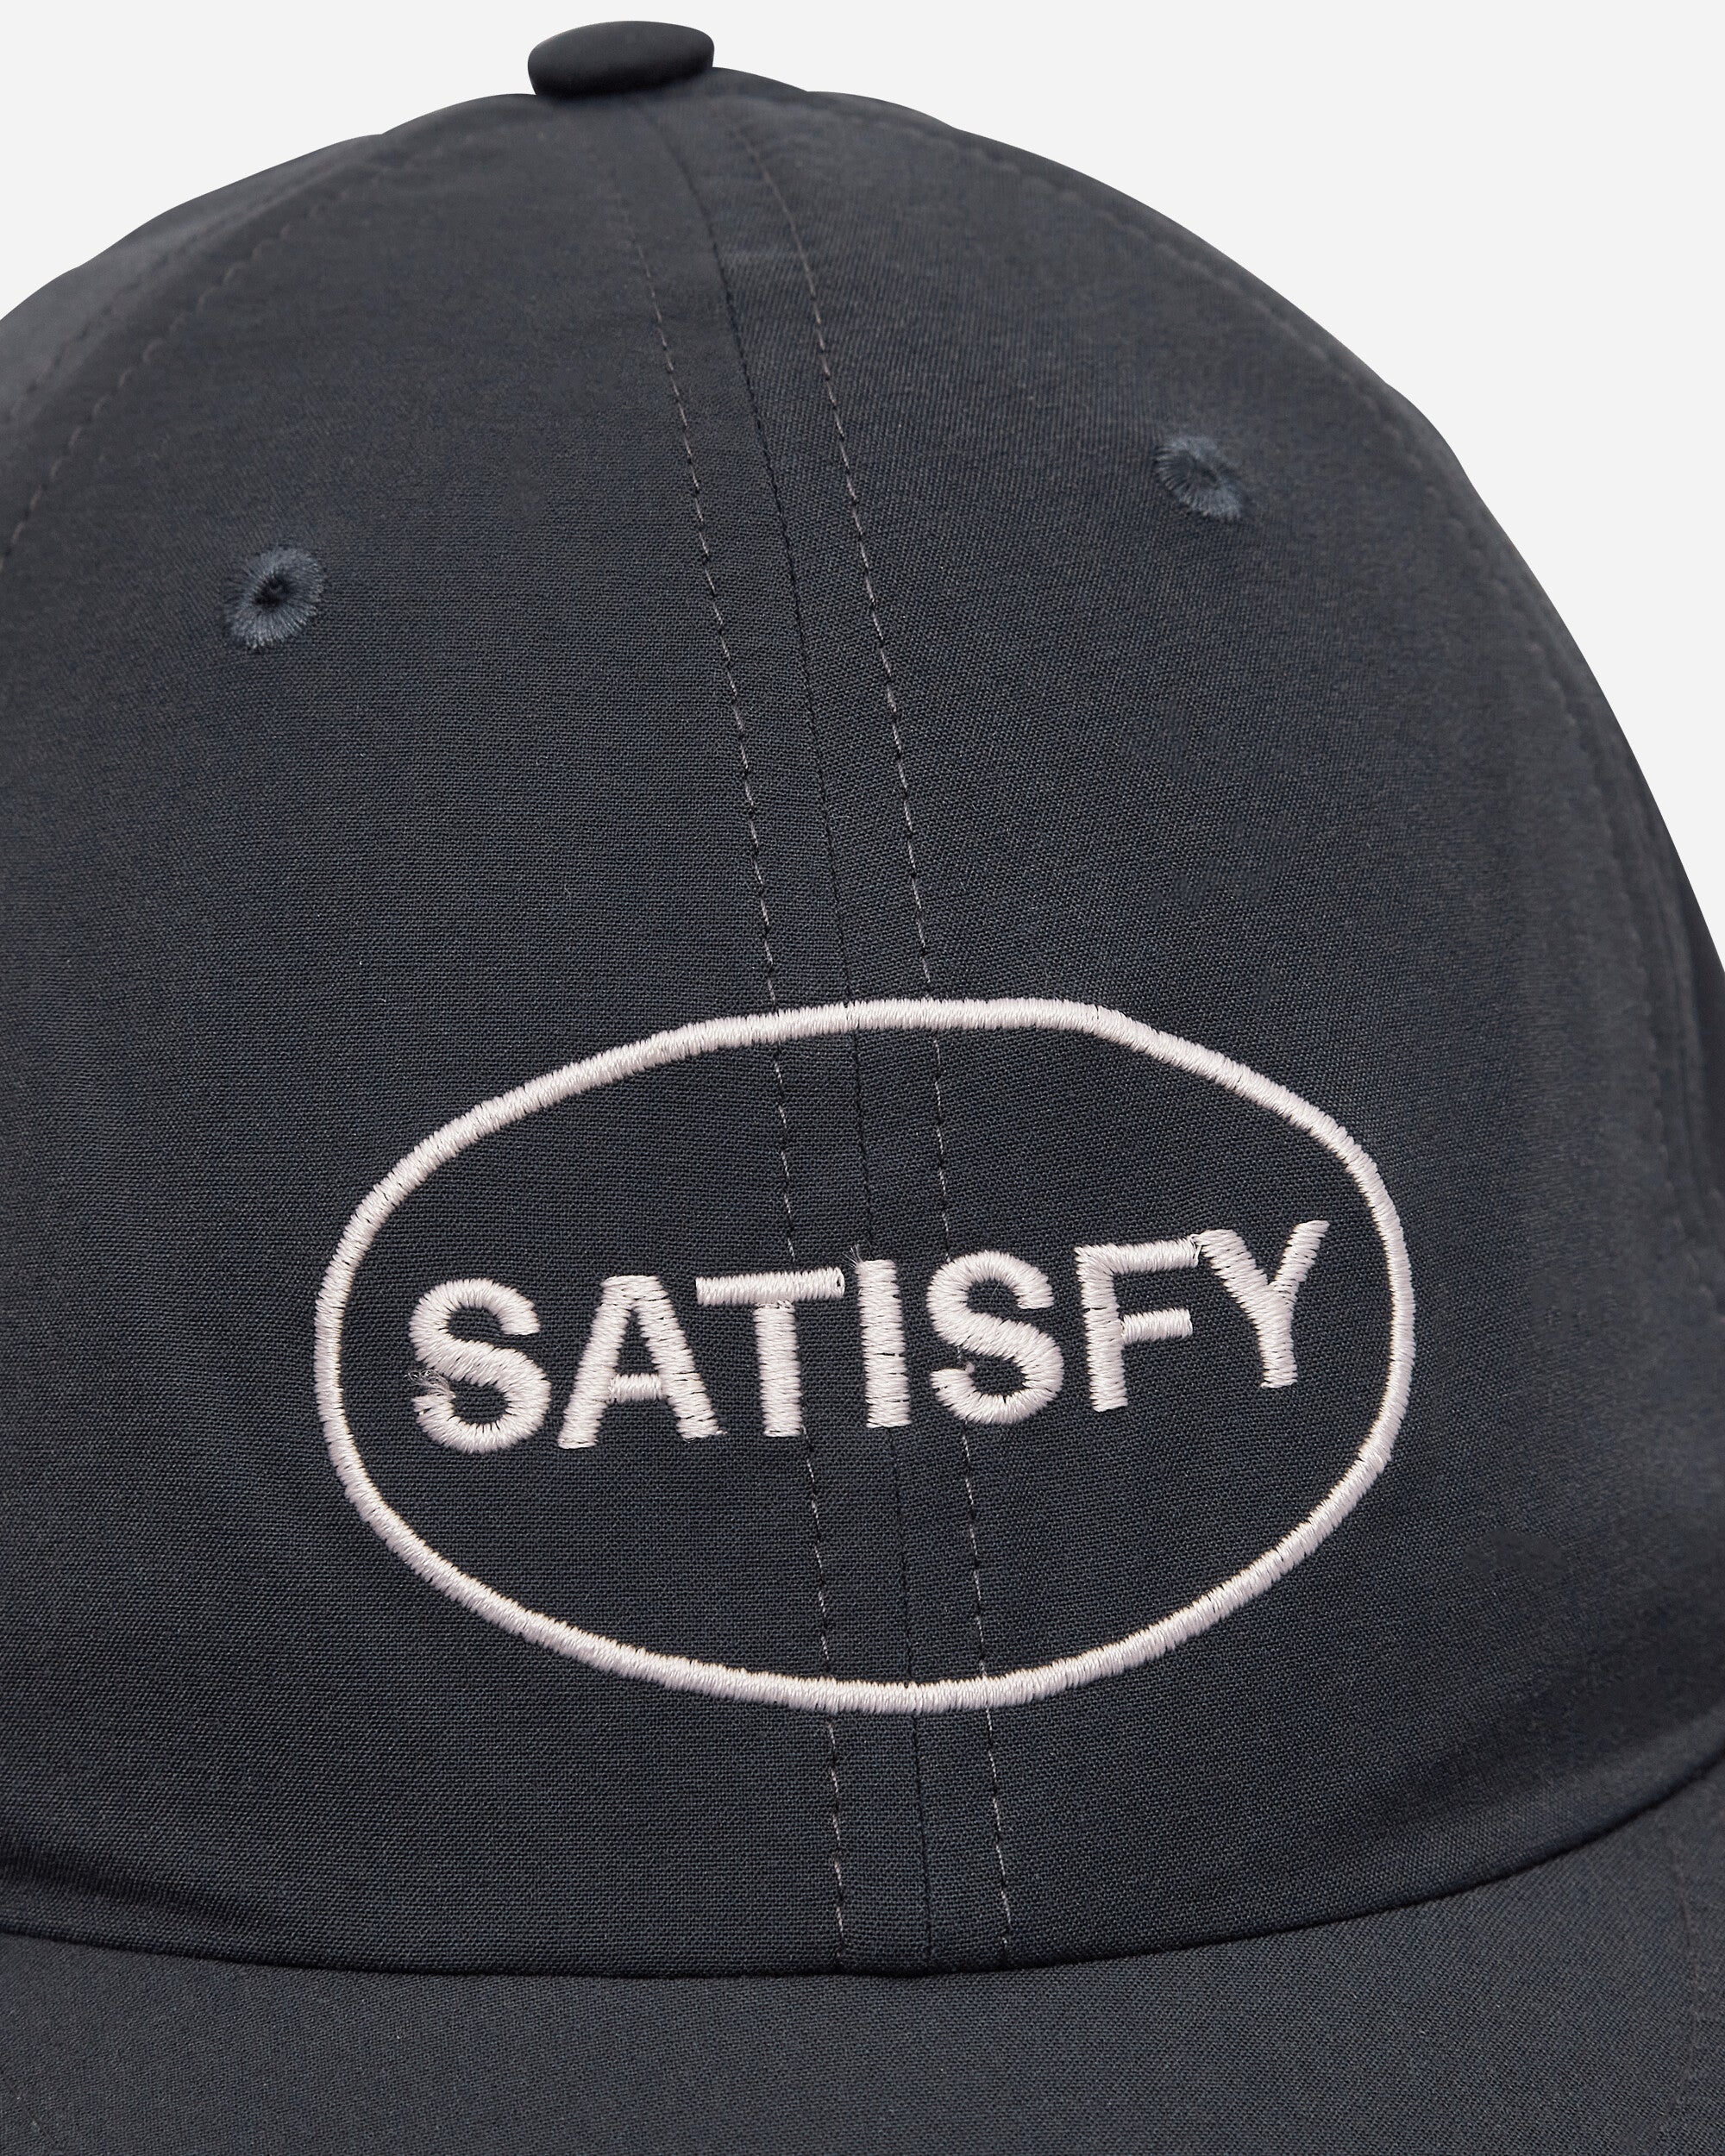 Satisfy Peaceshell Running Cap Charcoal Hats Caps 5115 CH-OV